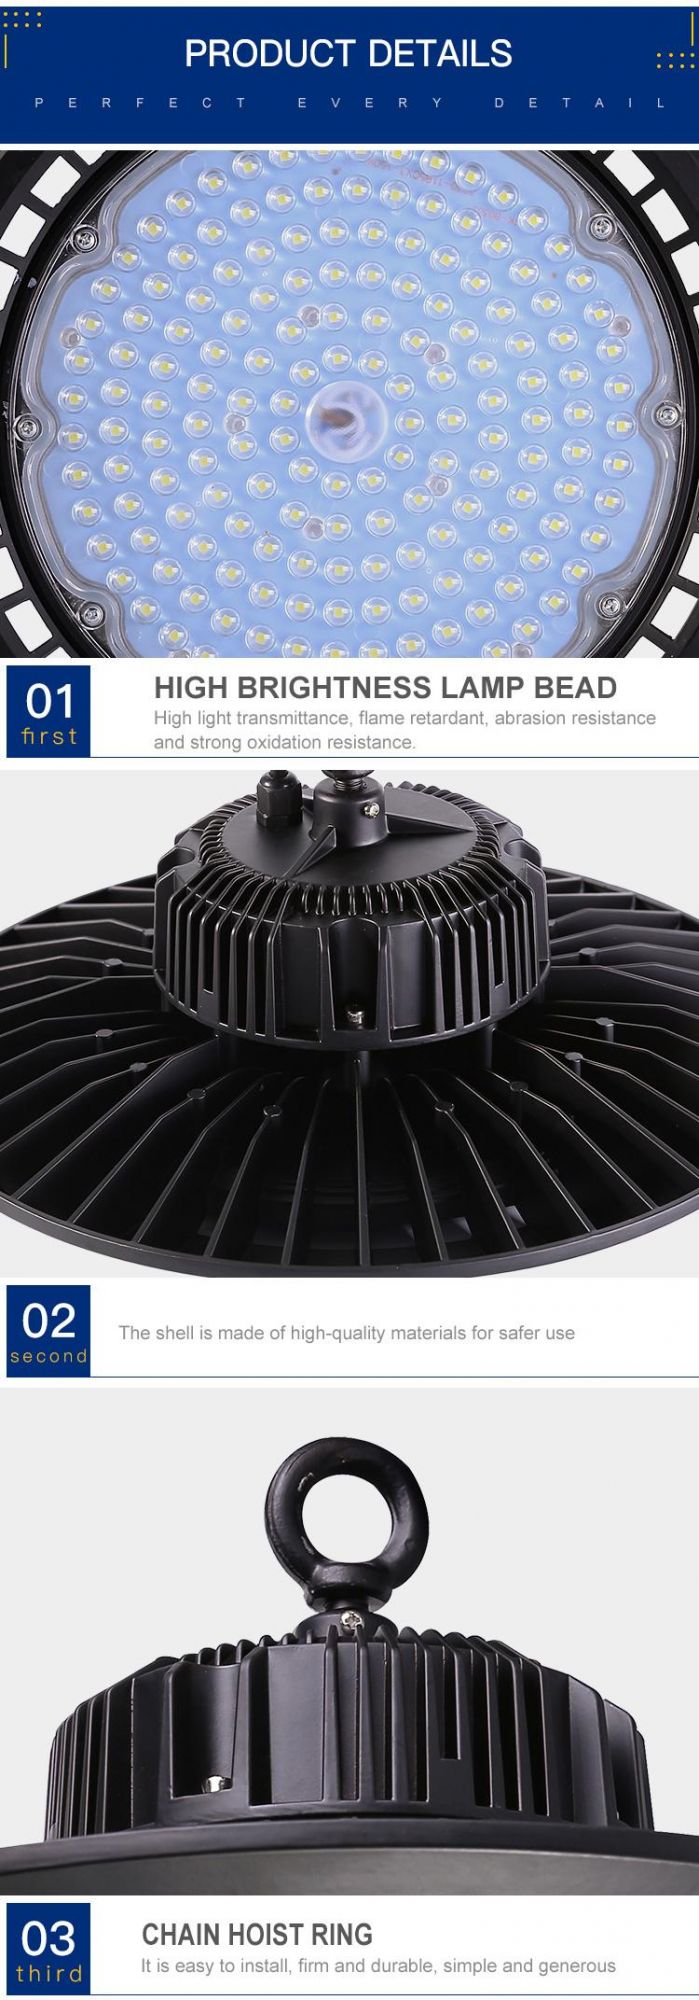 LED High Bay Light 50W100W150W200W Warehouse Lighting Lamp Manufacturer